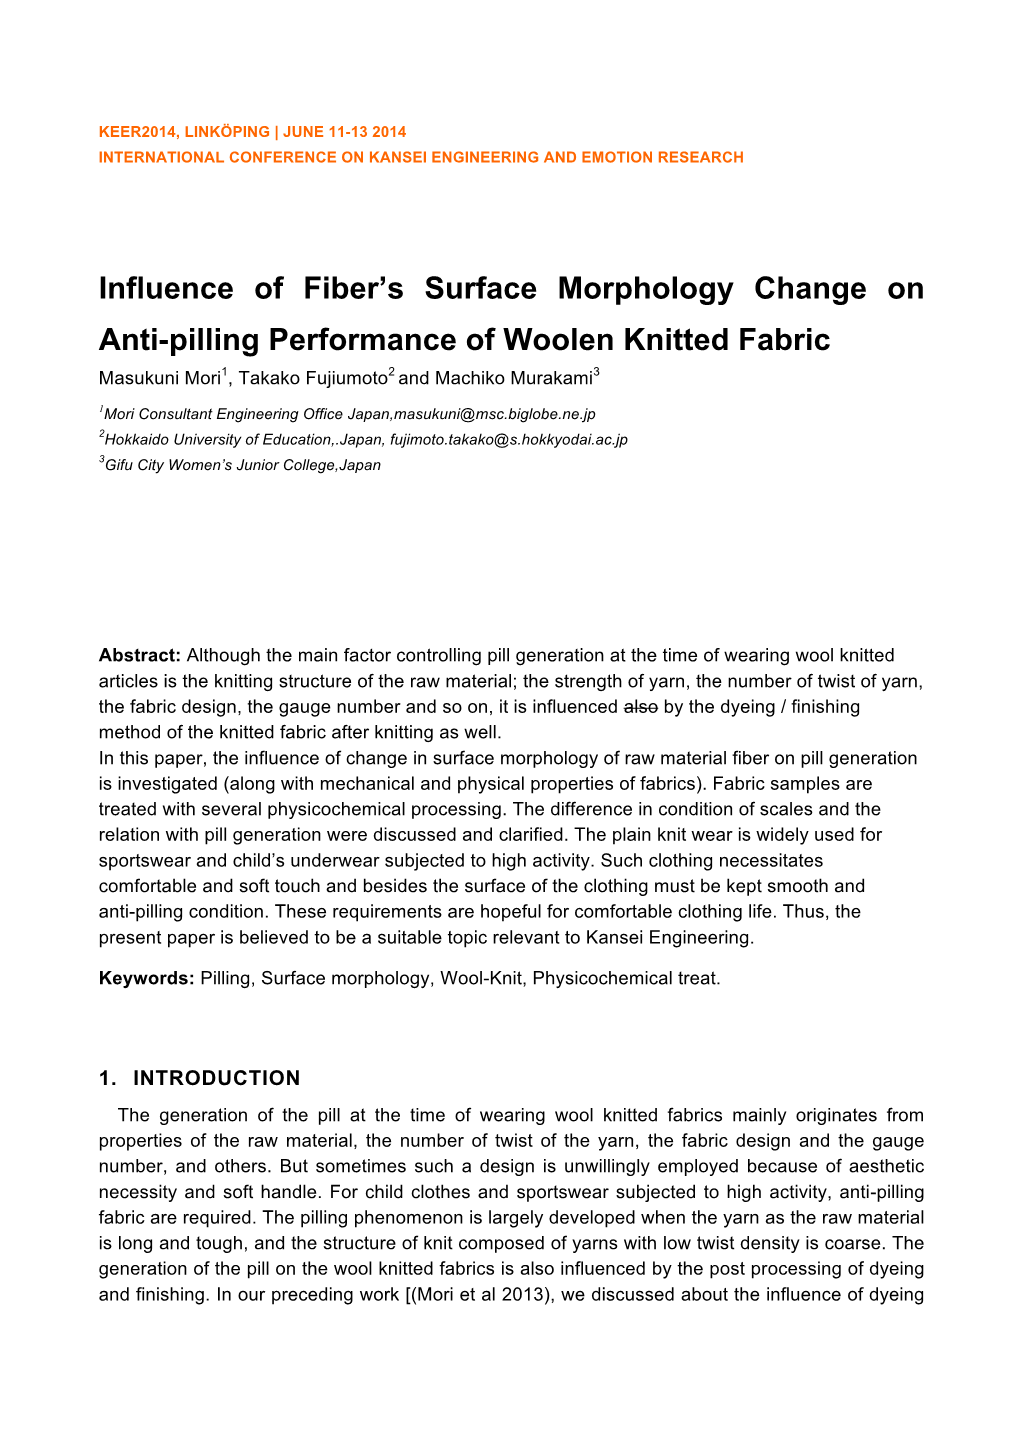 Influence of Fiber's Surface Morphology Change on Anti-Pilling